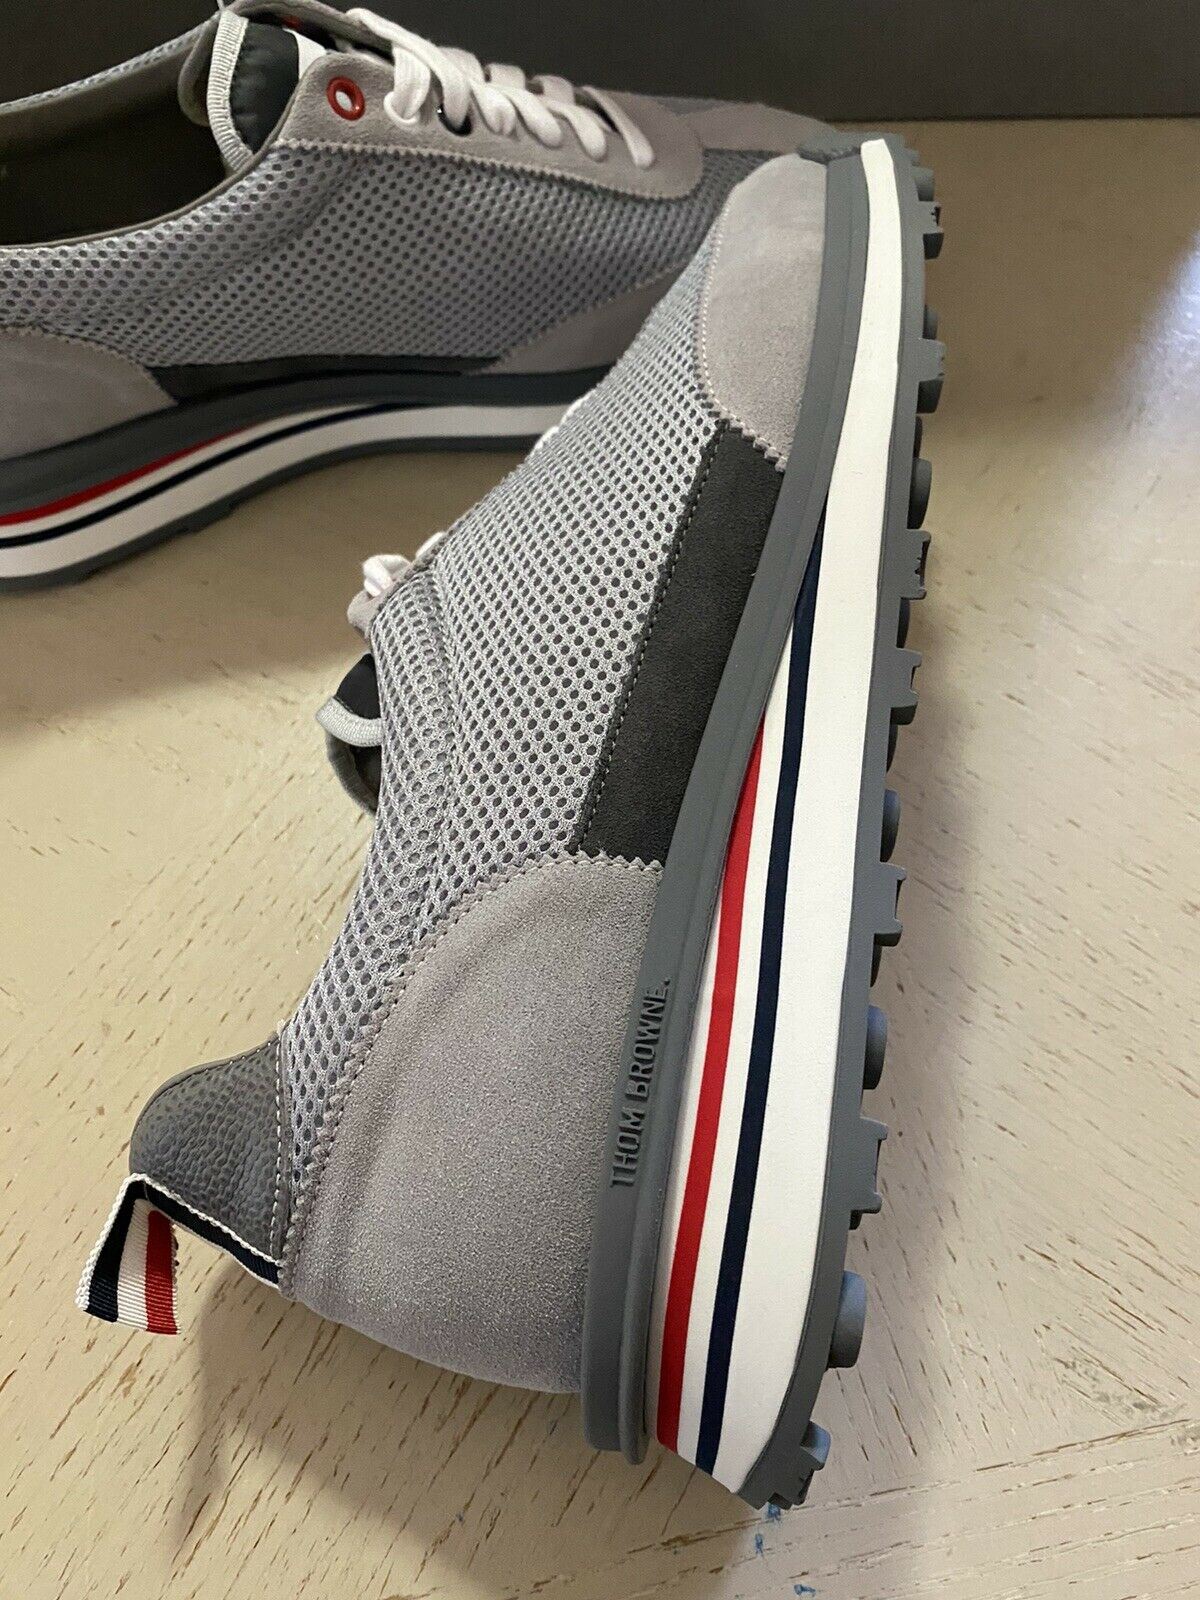 NIB $630 Thom Browne Men Tech Runner Mesh&Suede Sneakers Shoes Gray 12 US/45 Eu